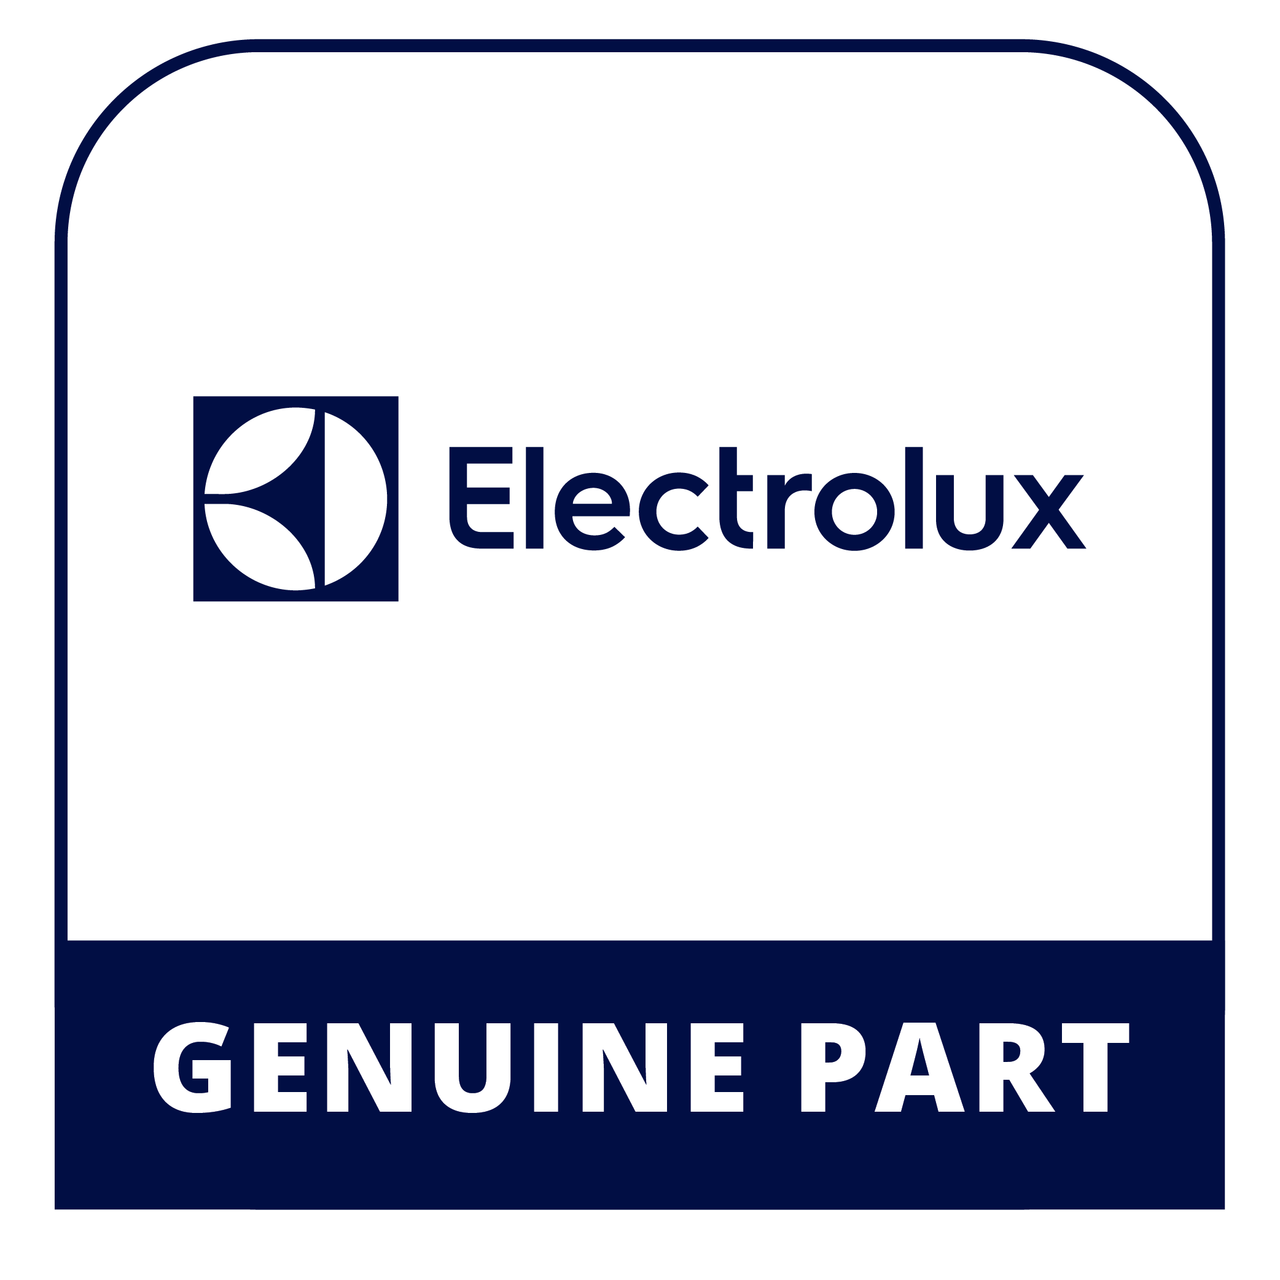 Frigidaire - Electrolux 5304524362 Magnet - Genuine Electrolux Part